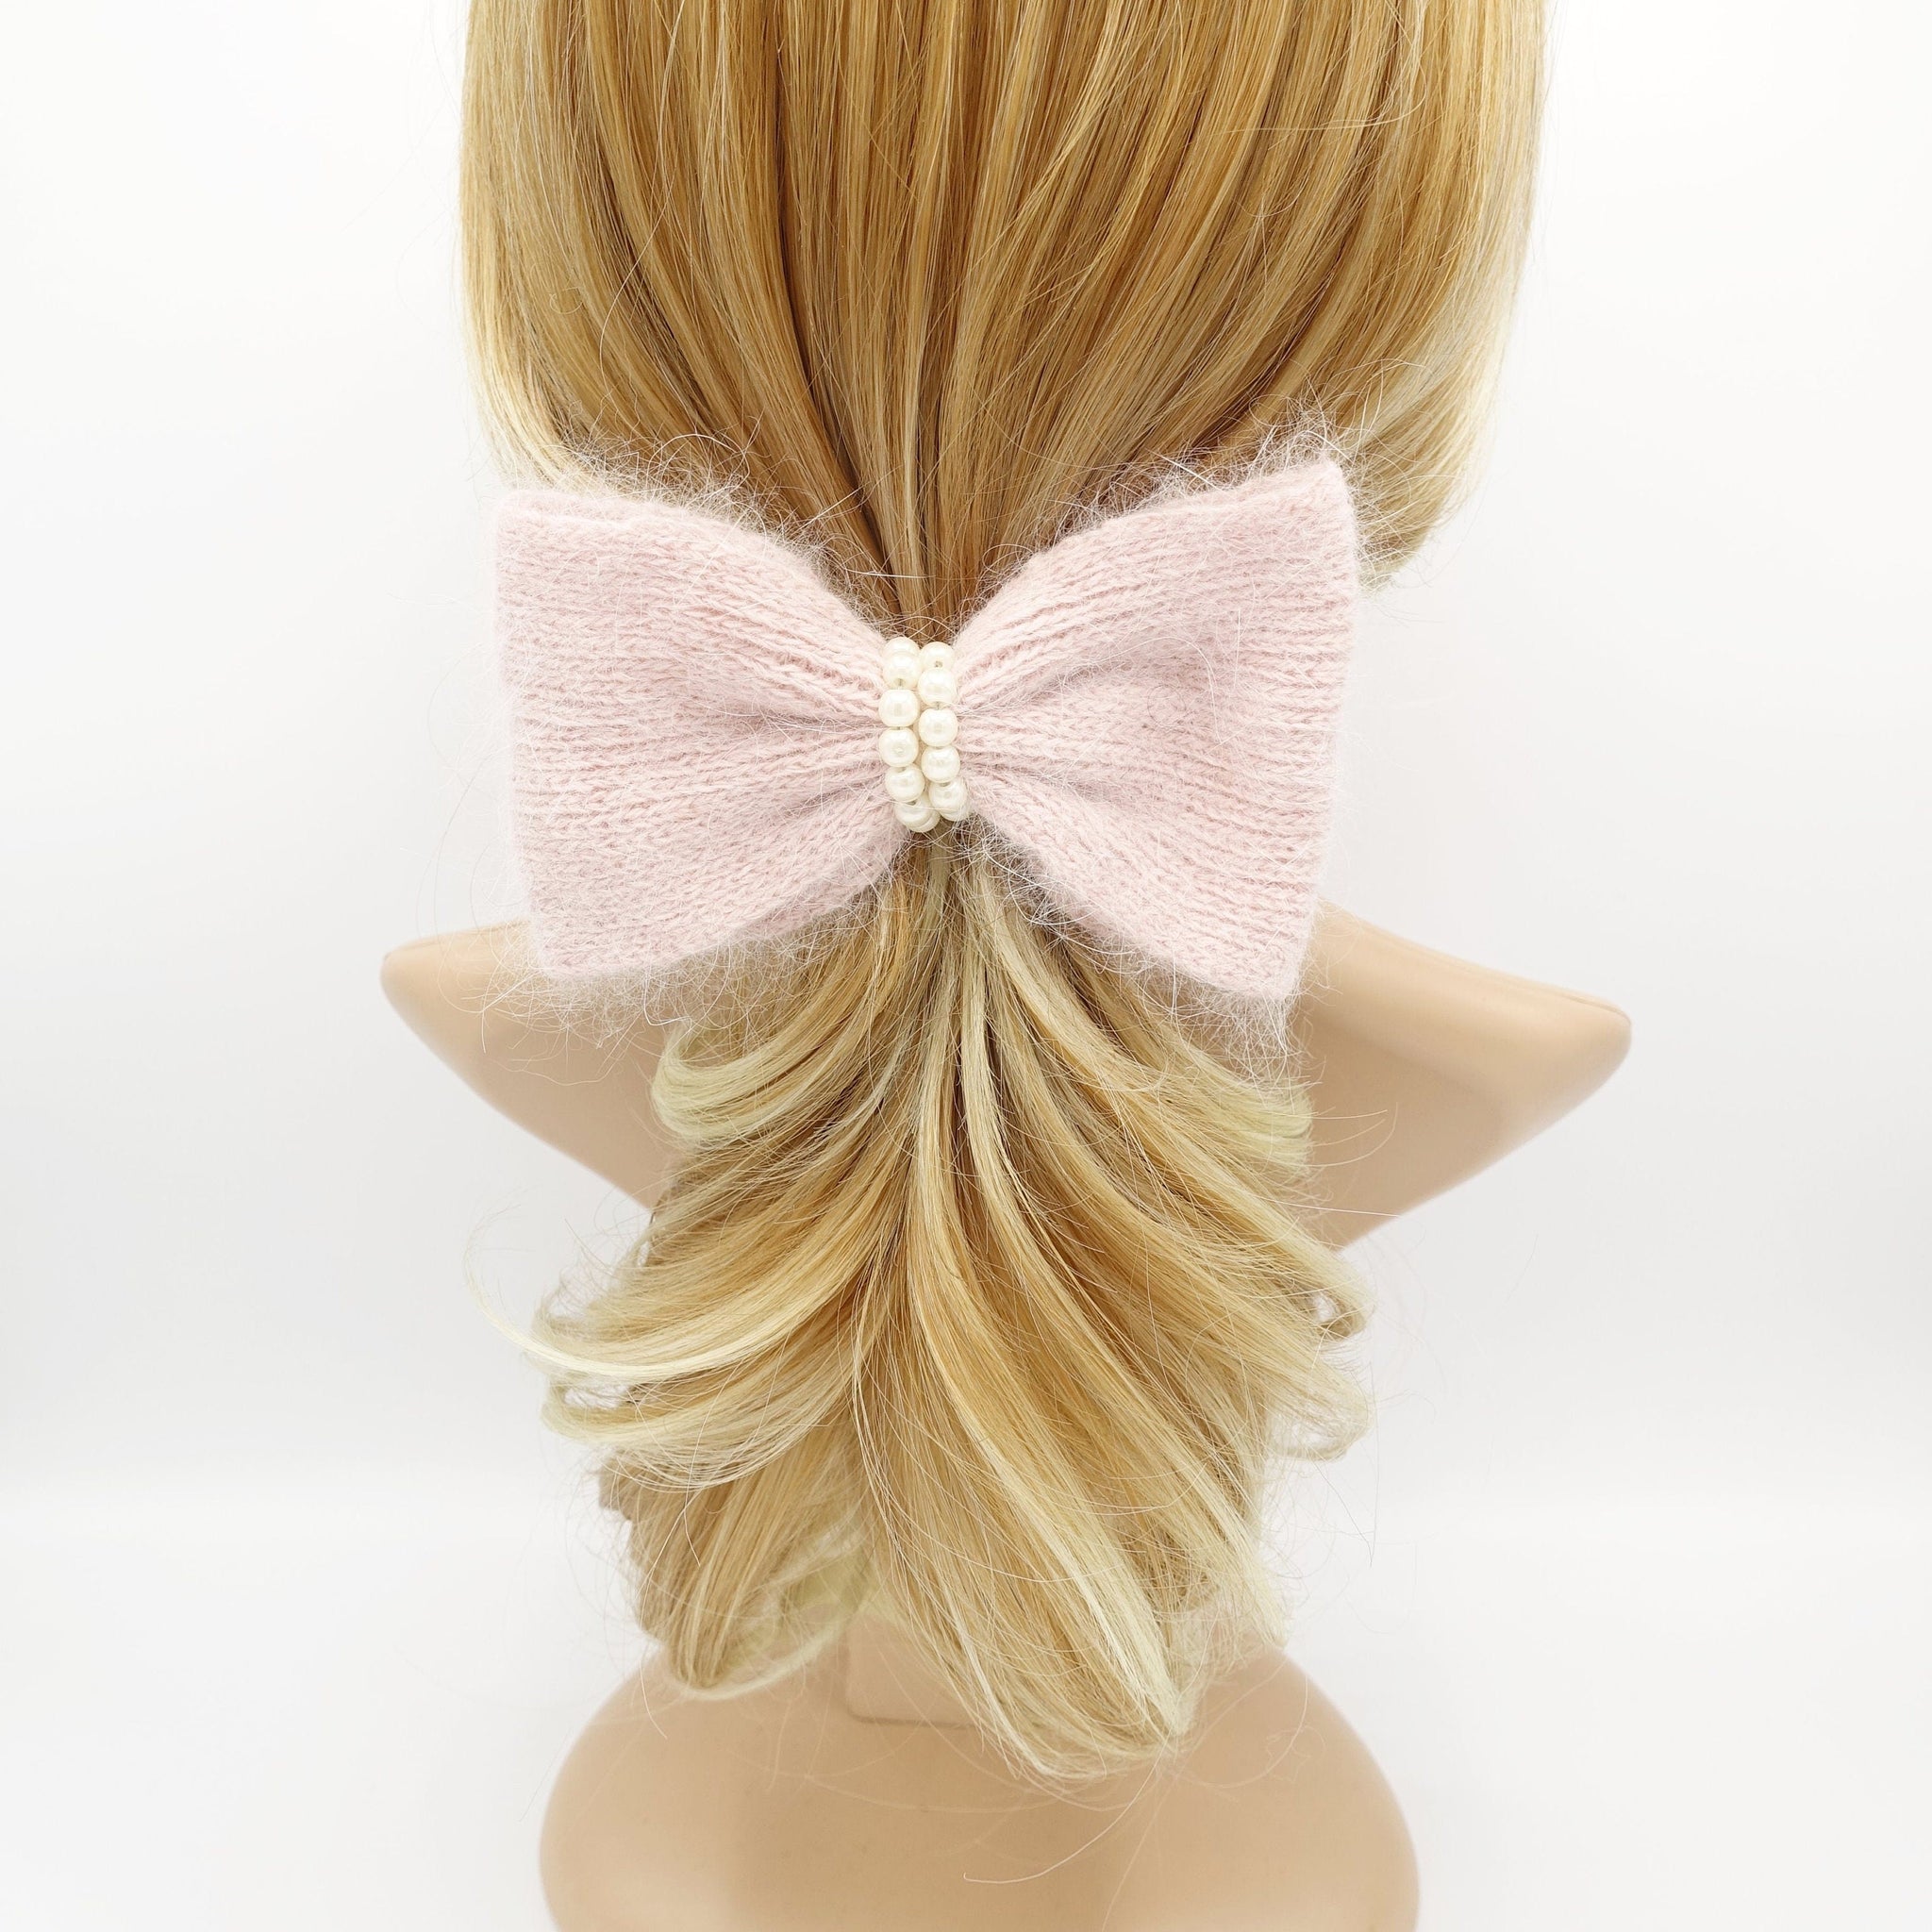 veryshine.com Barrette (Bow) Pink angora hair bow pearl embellished Fall Winter women hair barrette